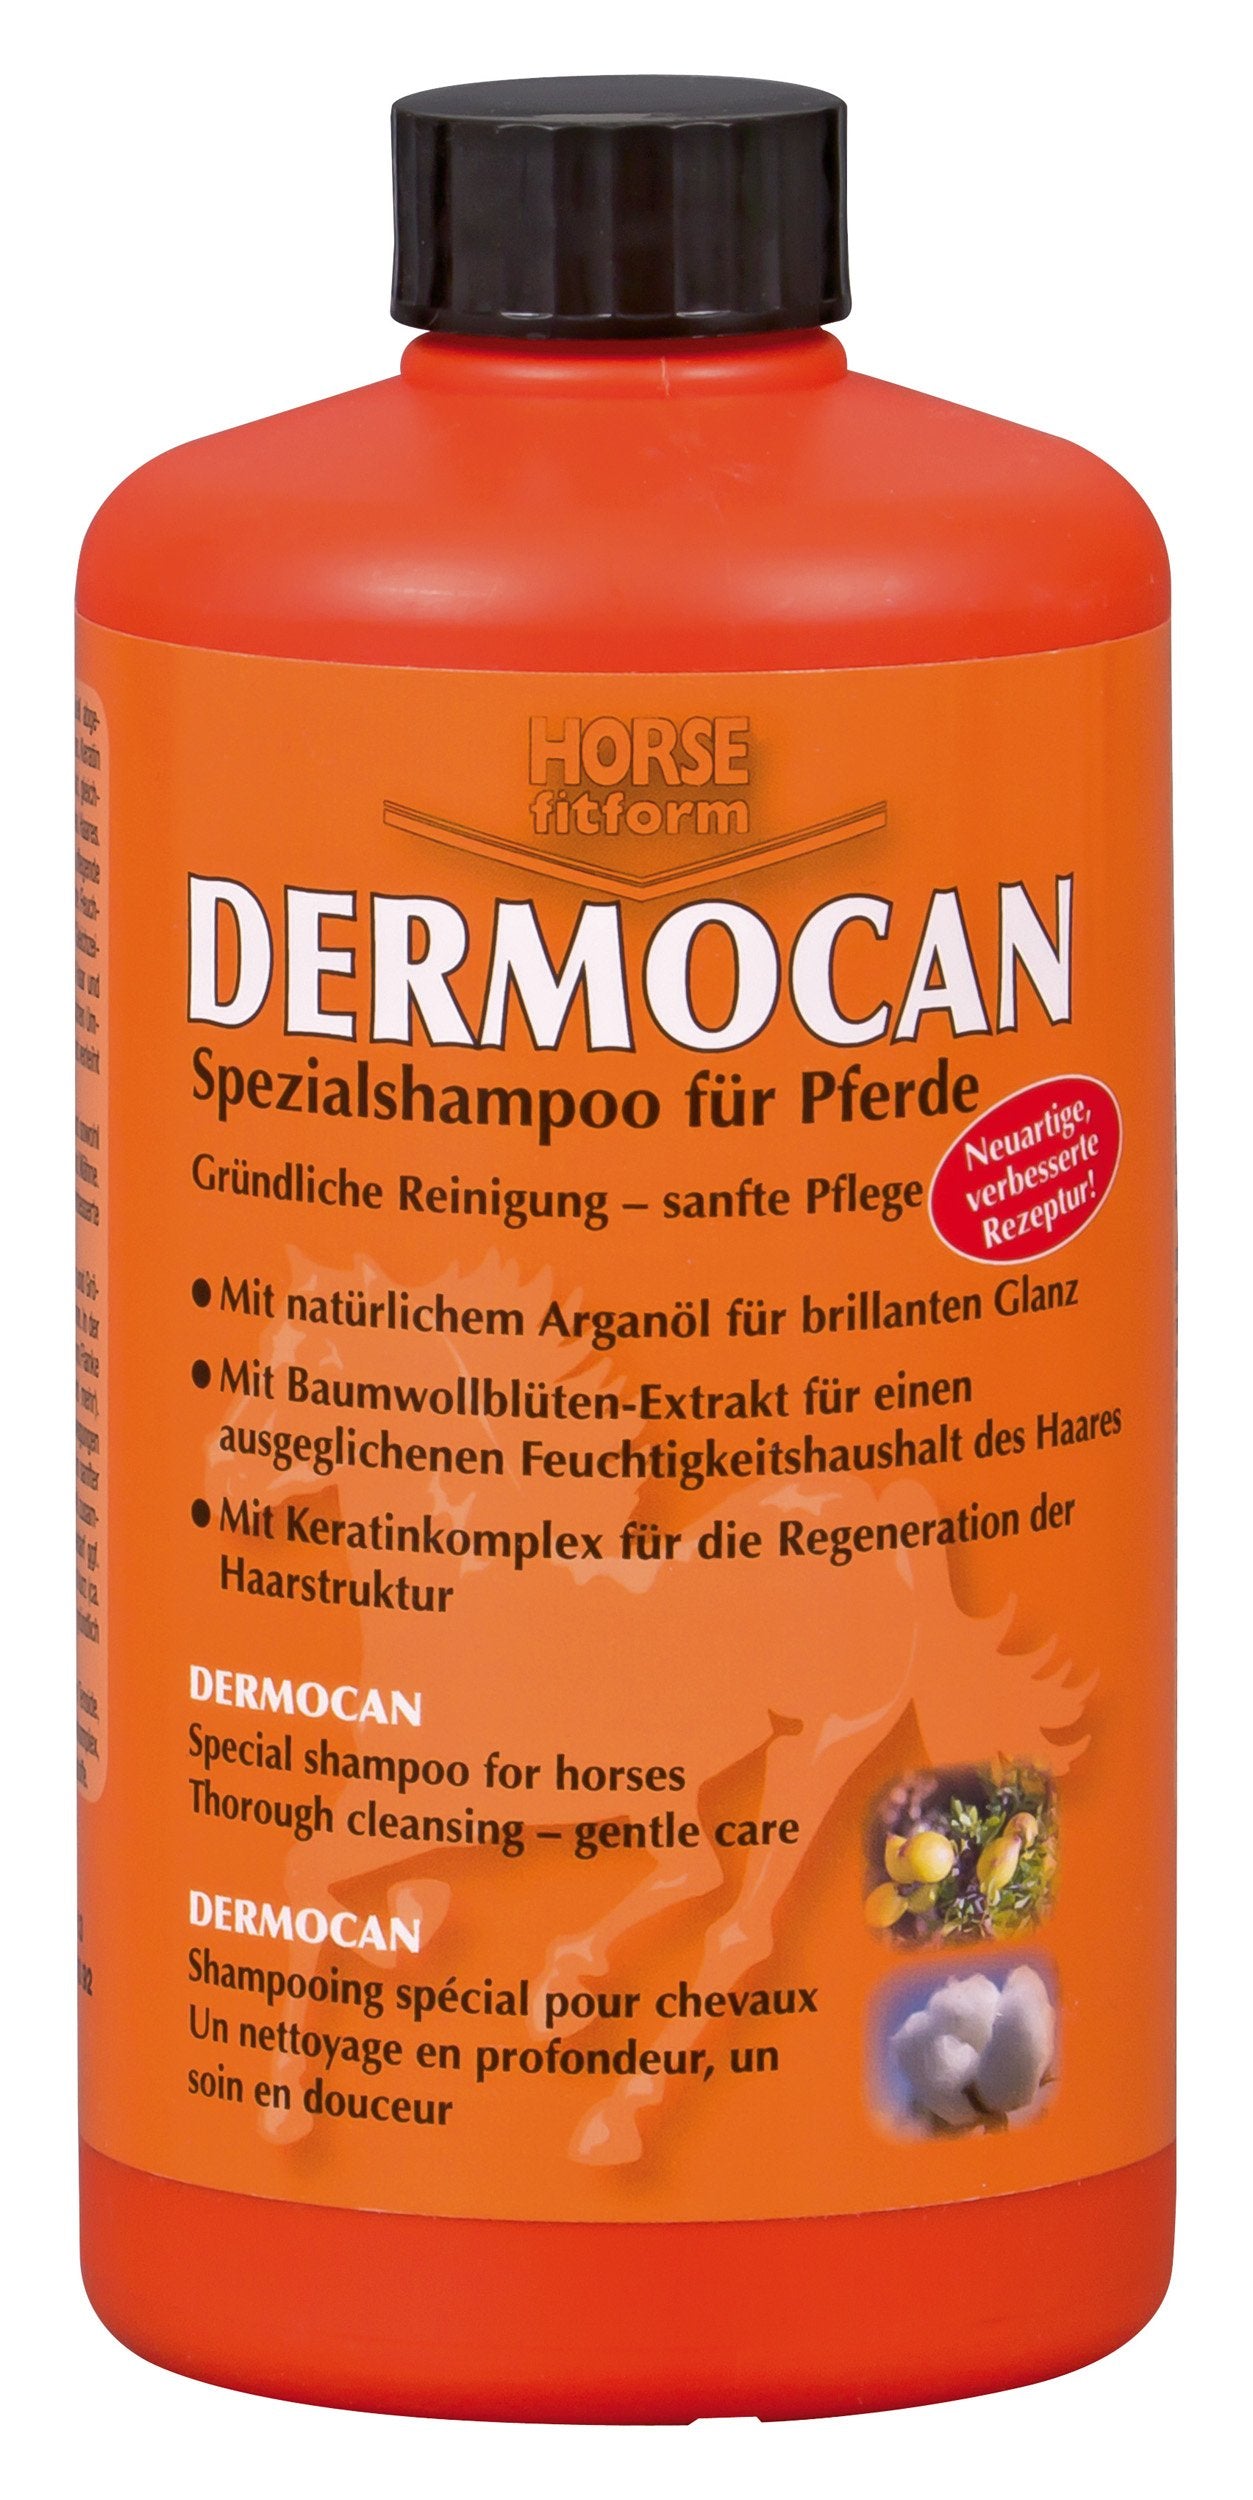 Dermocan - Shampoo for horses